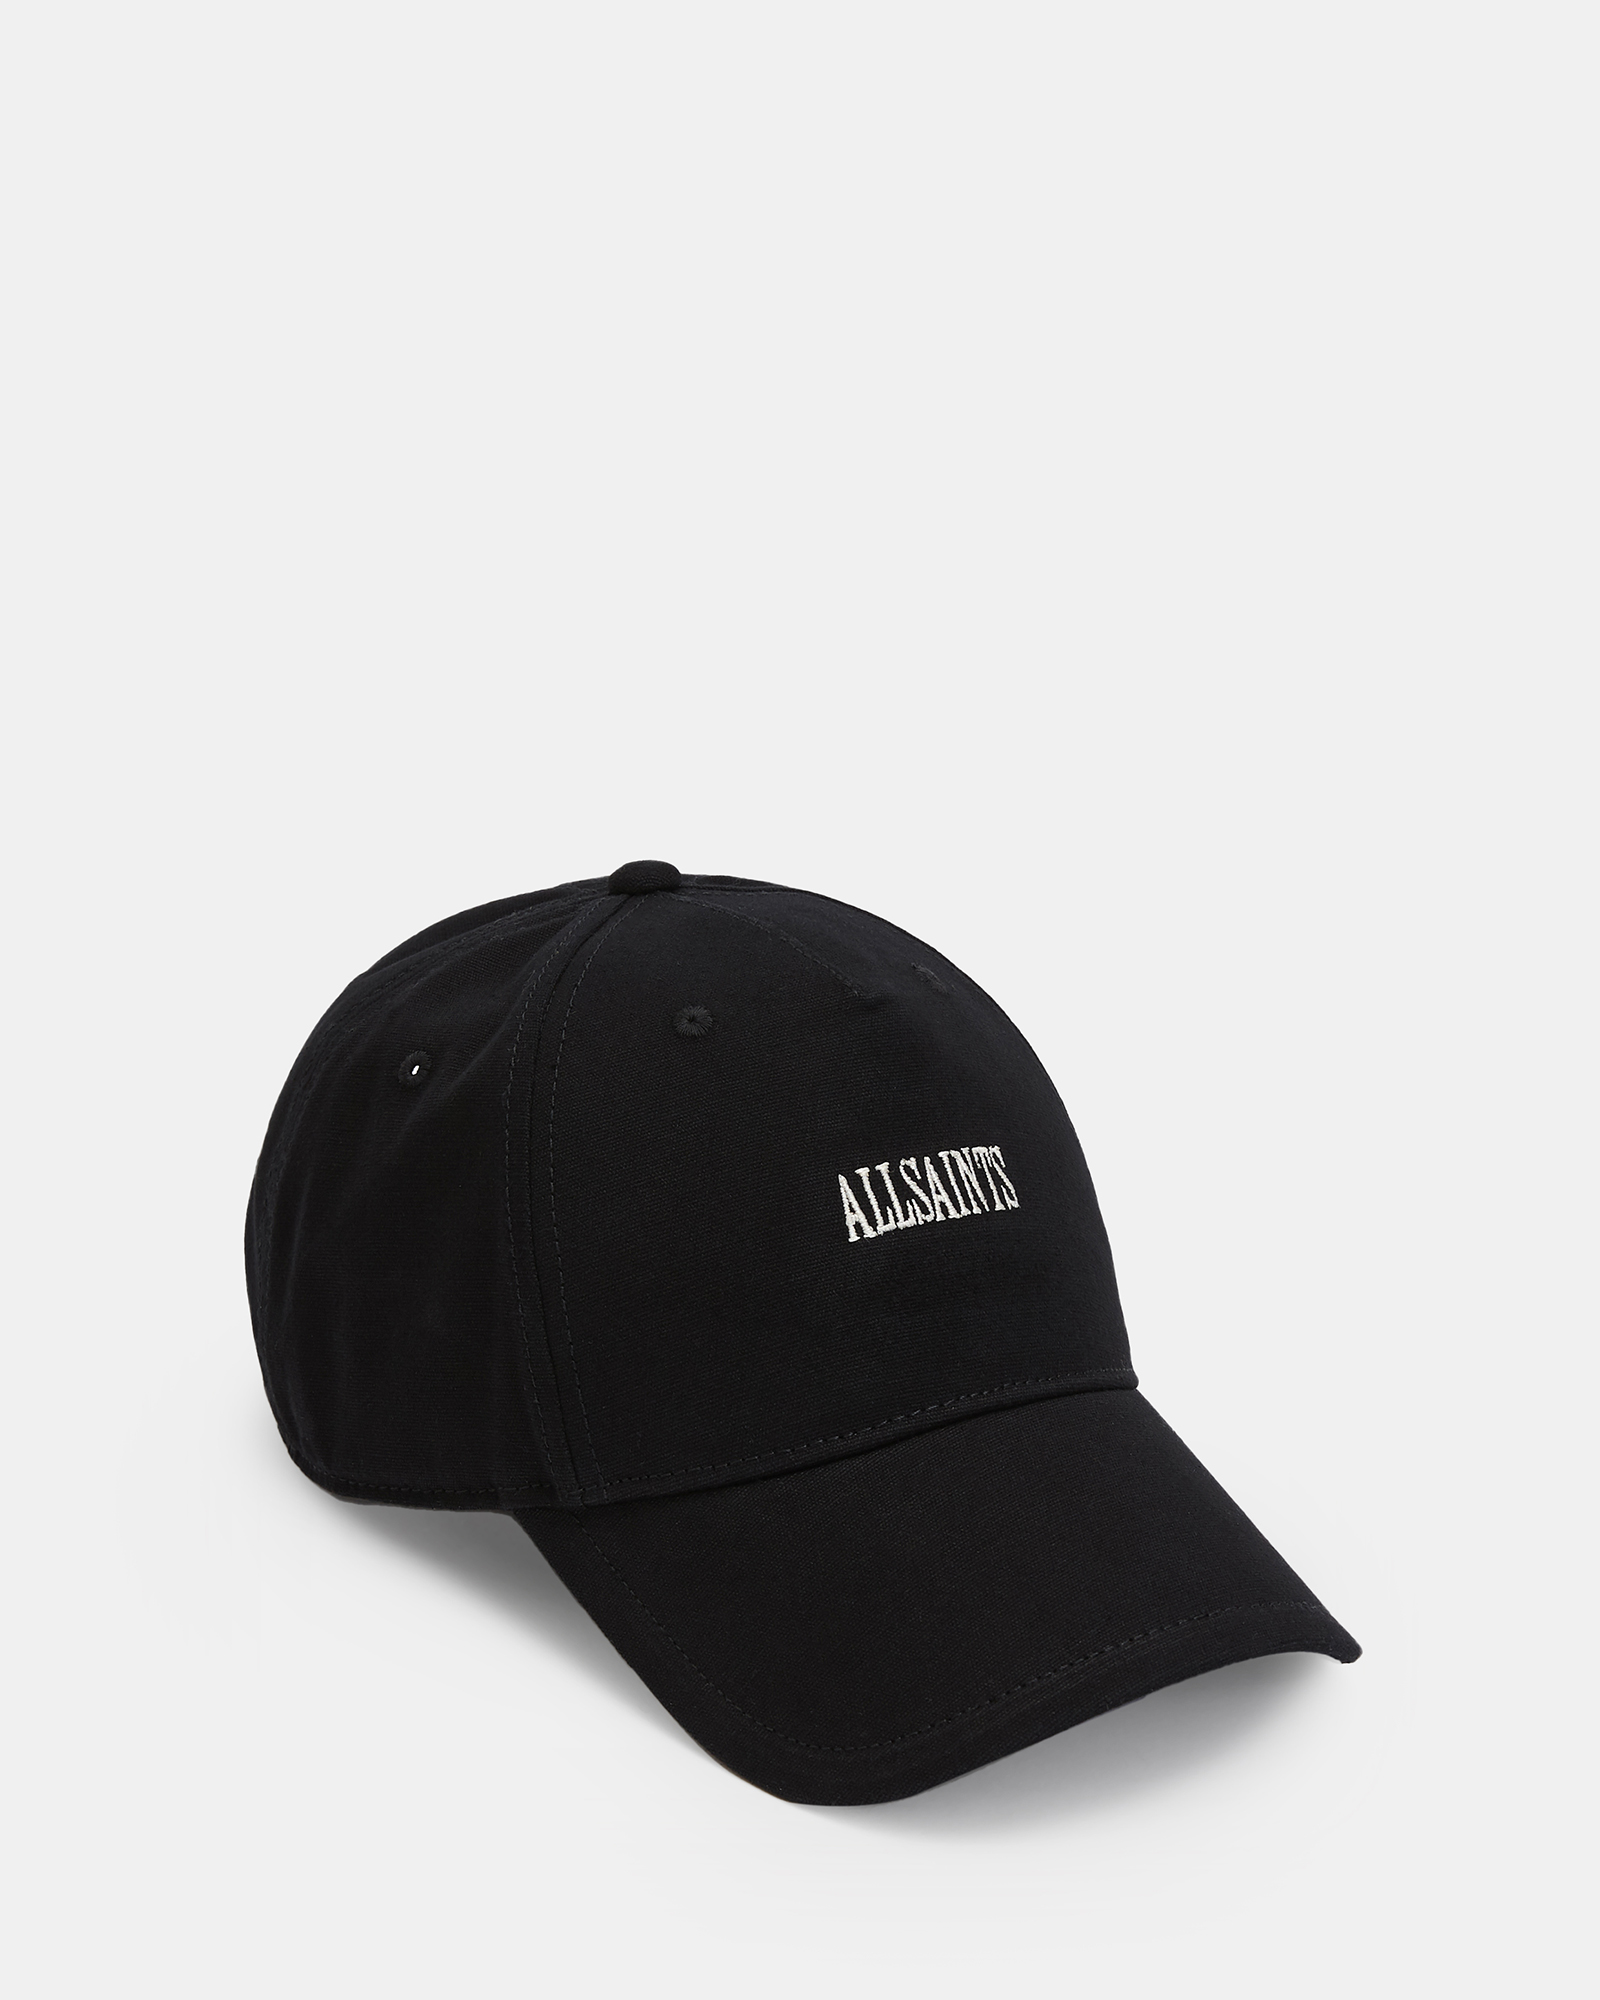 AllSaints Axl Baseball Cap,, Black/White